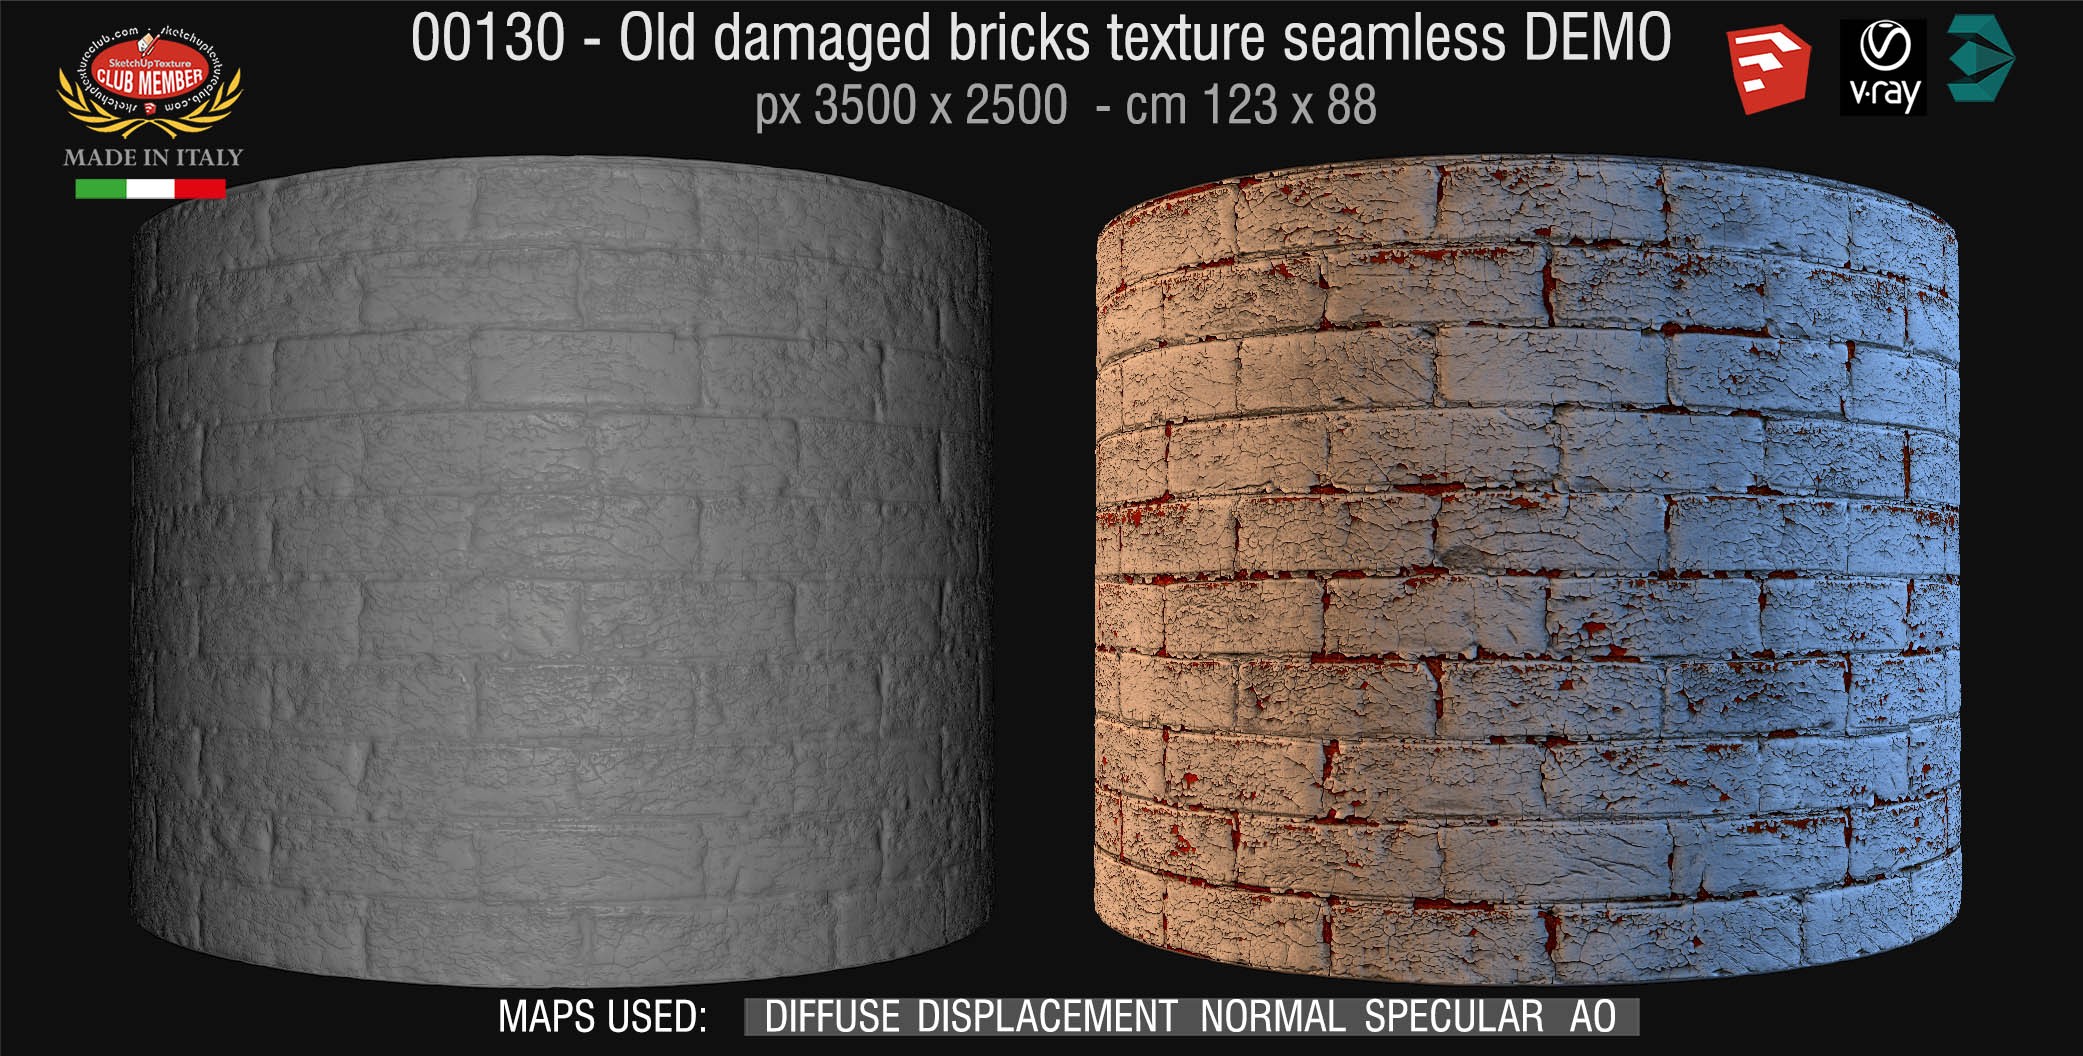 00130 HR Damaged bricks texture seamless + maps DEMO